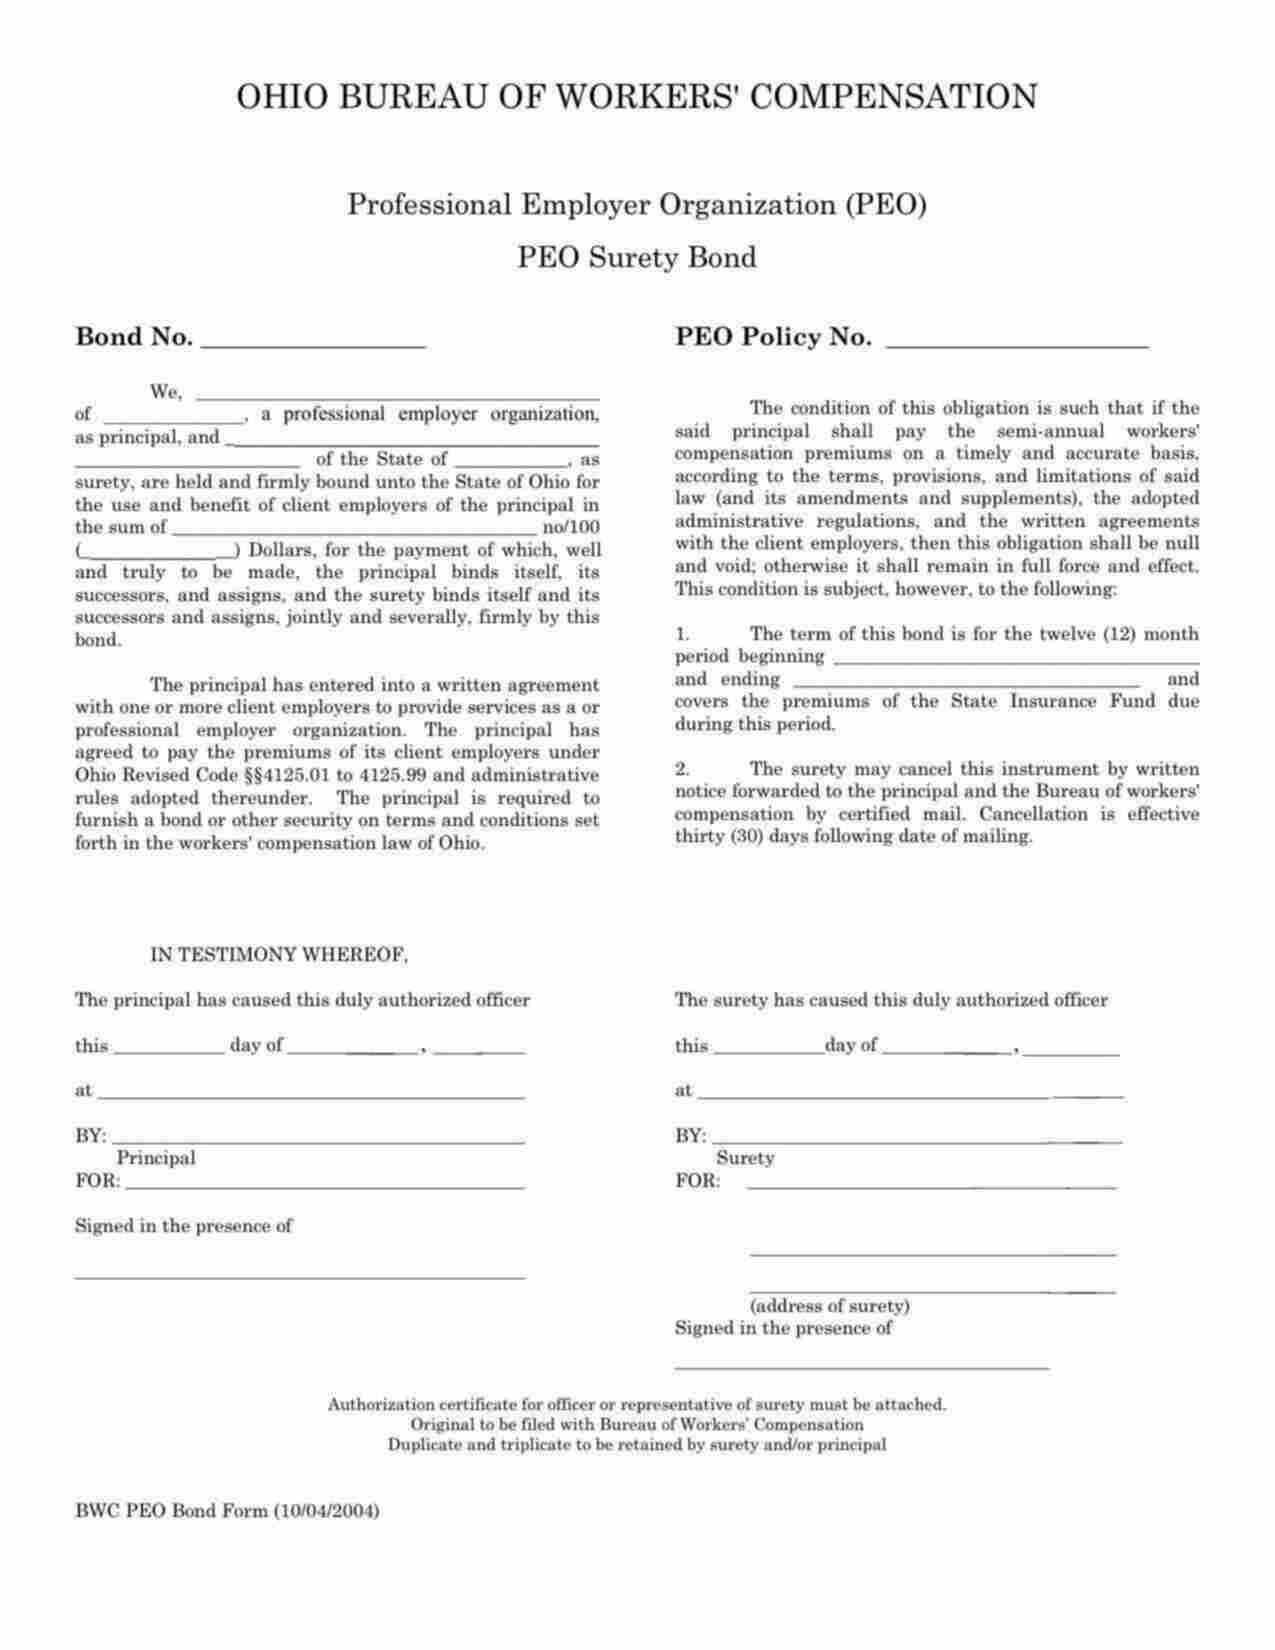 Ohio Professional Employer Organization Bond Form